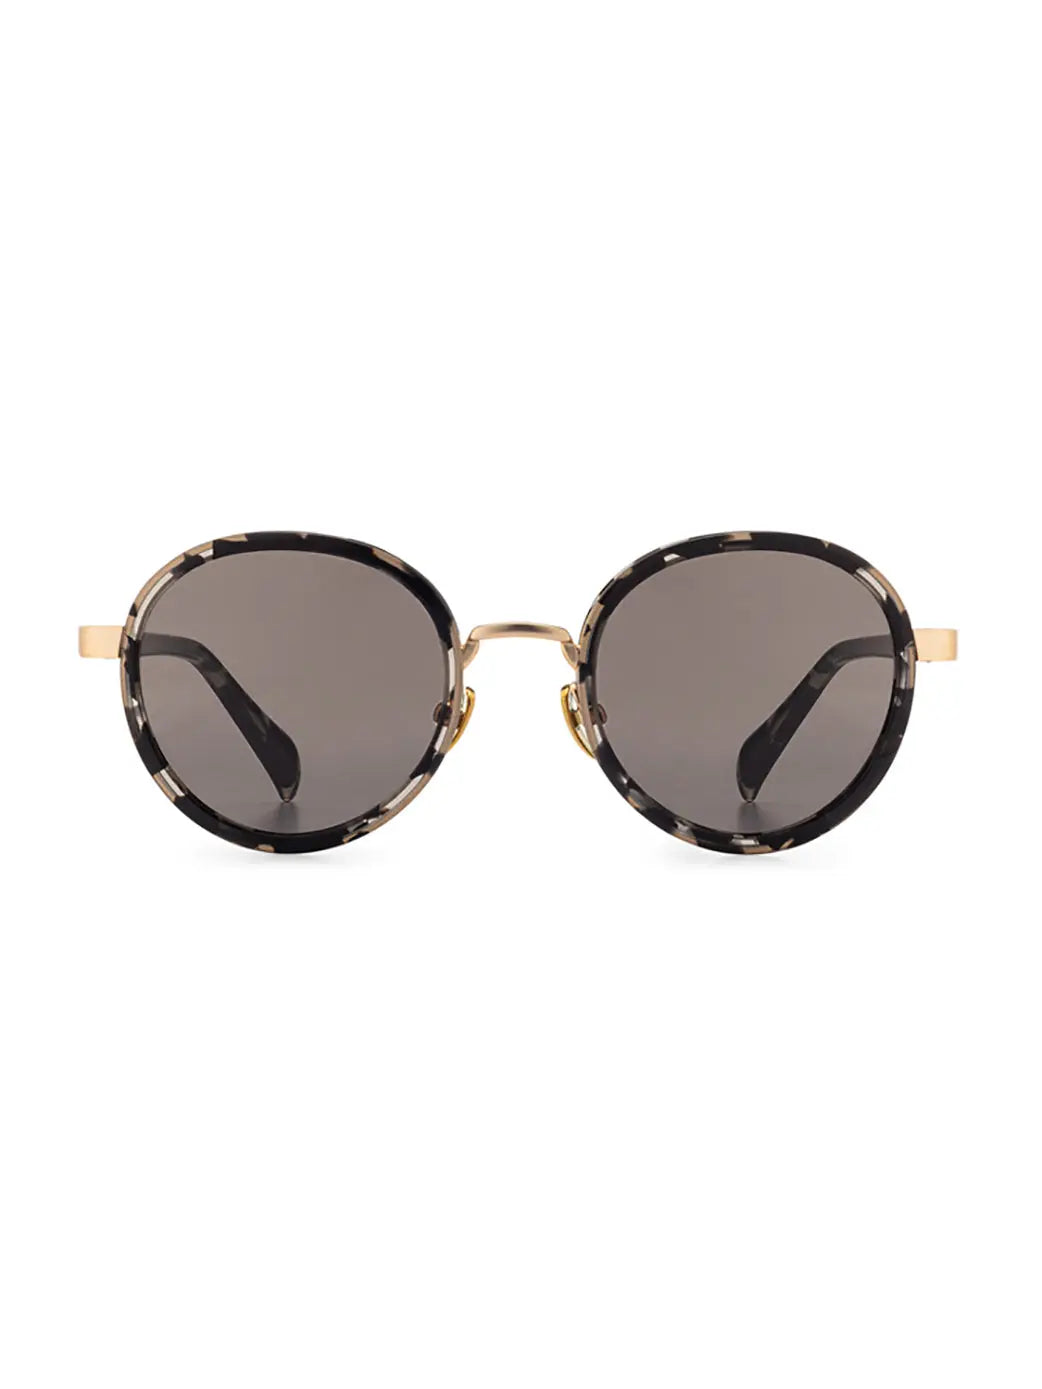 Louis Vuitton Ultra Violet Unisex Sunglasses  -Mens-Boys-Online- @ Cheap Rates-Free Shipping-COD